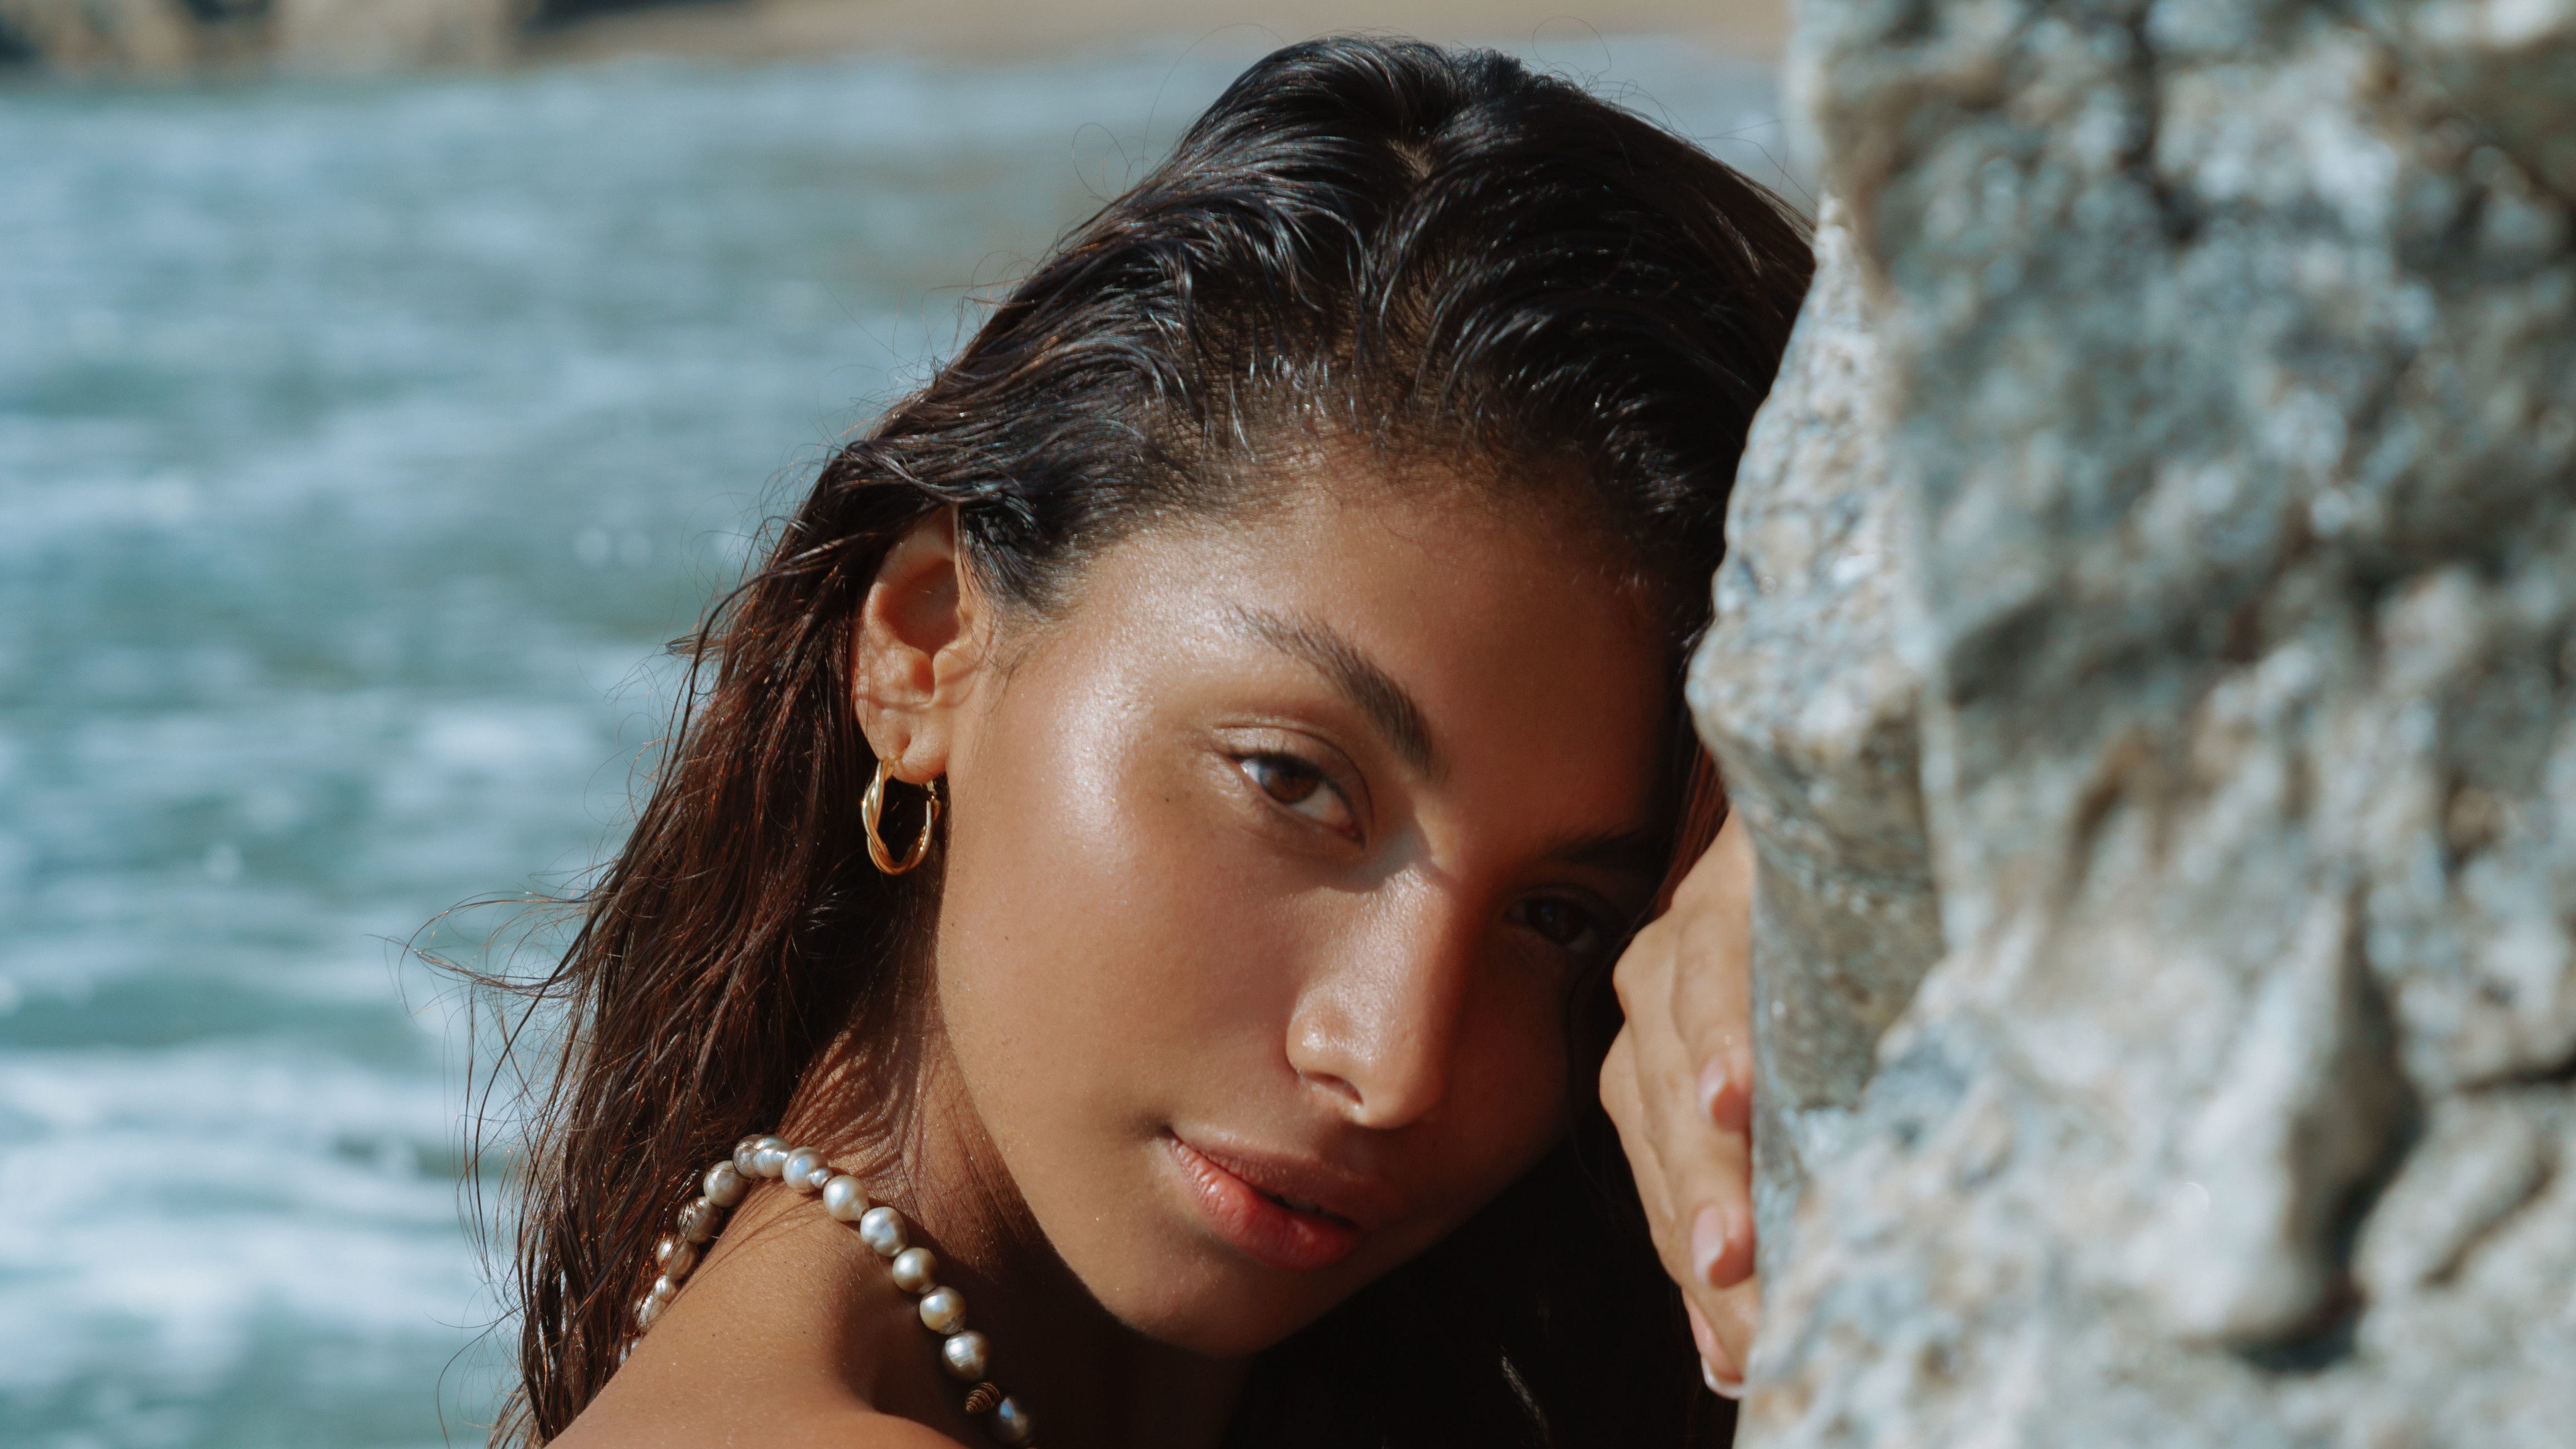 People 3840x2160 Carolina Reyes women women outdoors seashore looking at viewer rocks wall sensual gaze face closeup